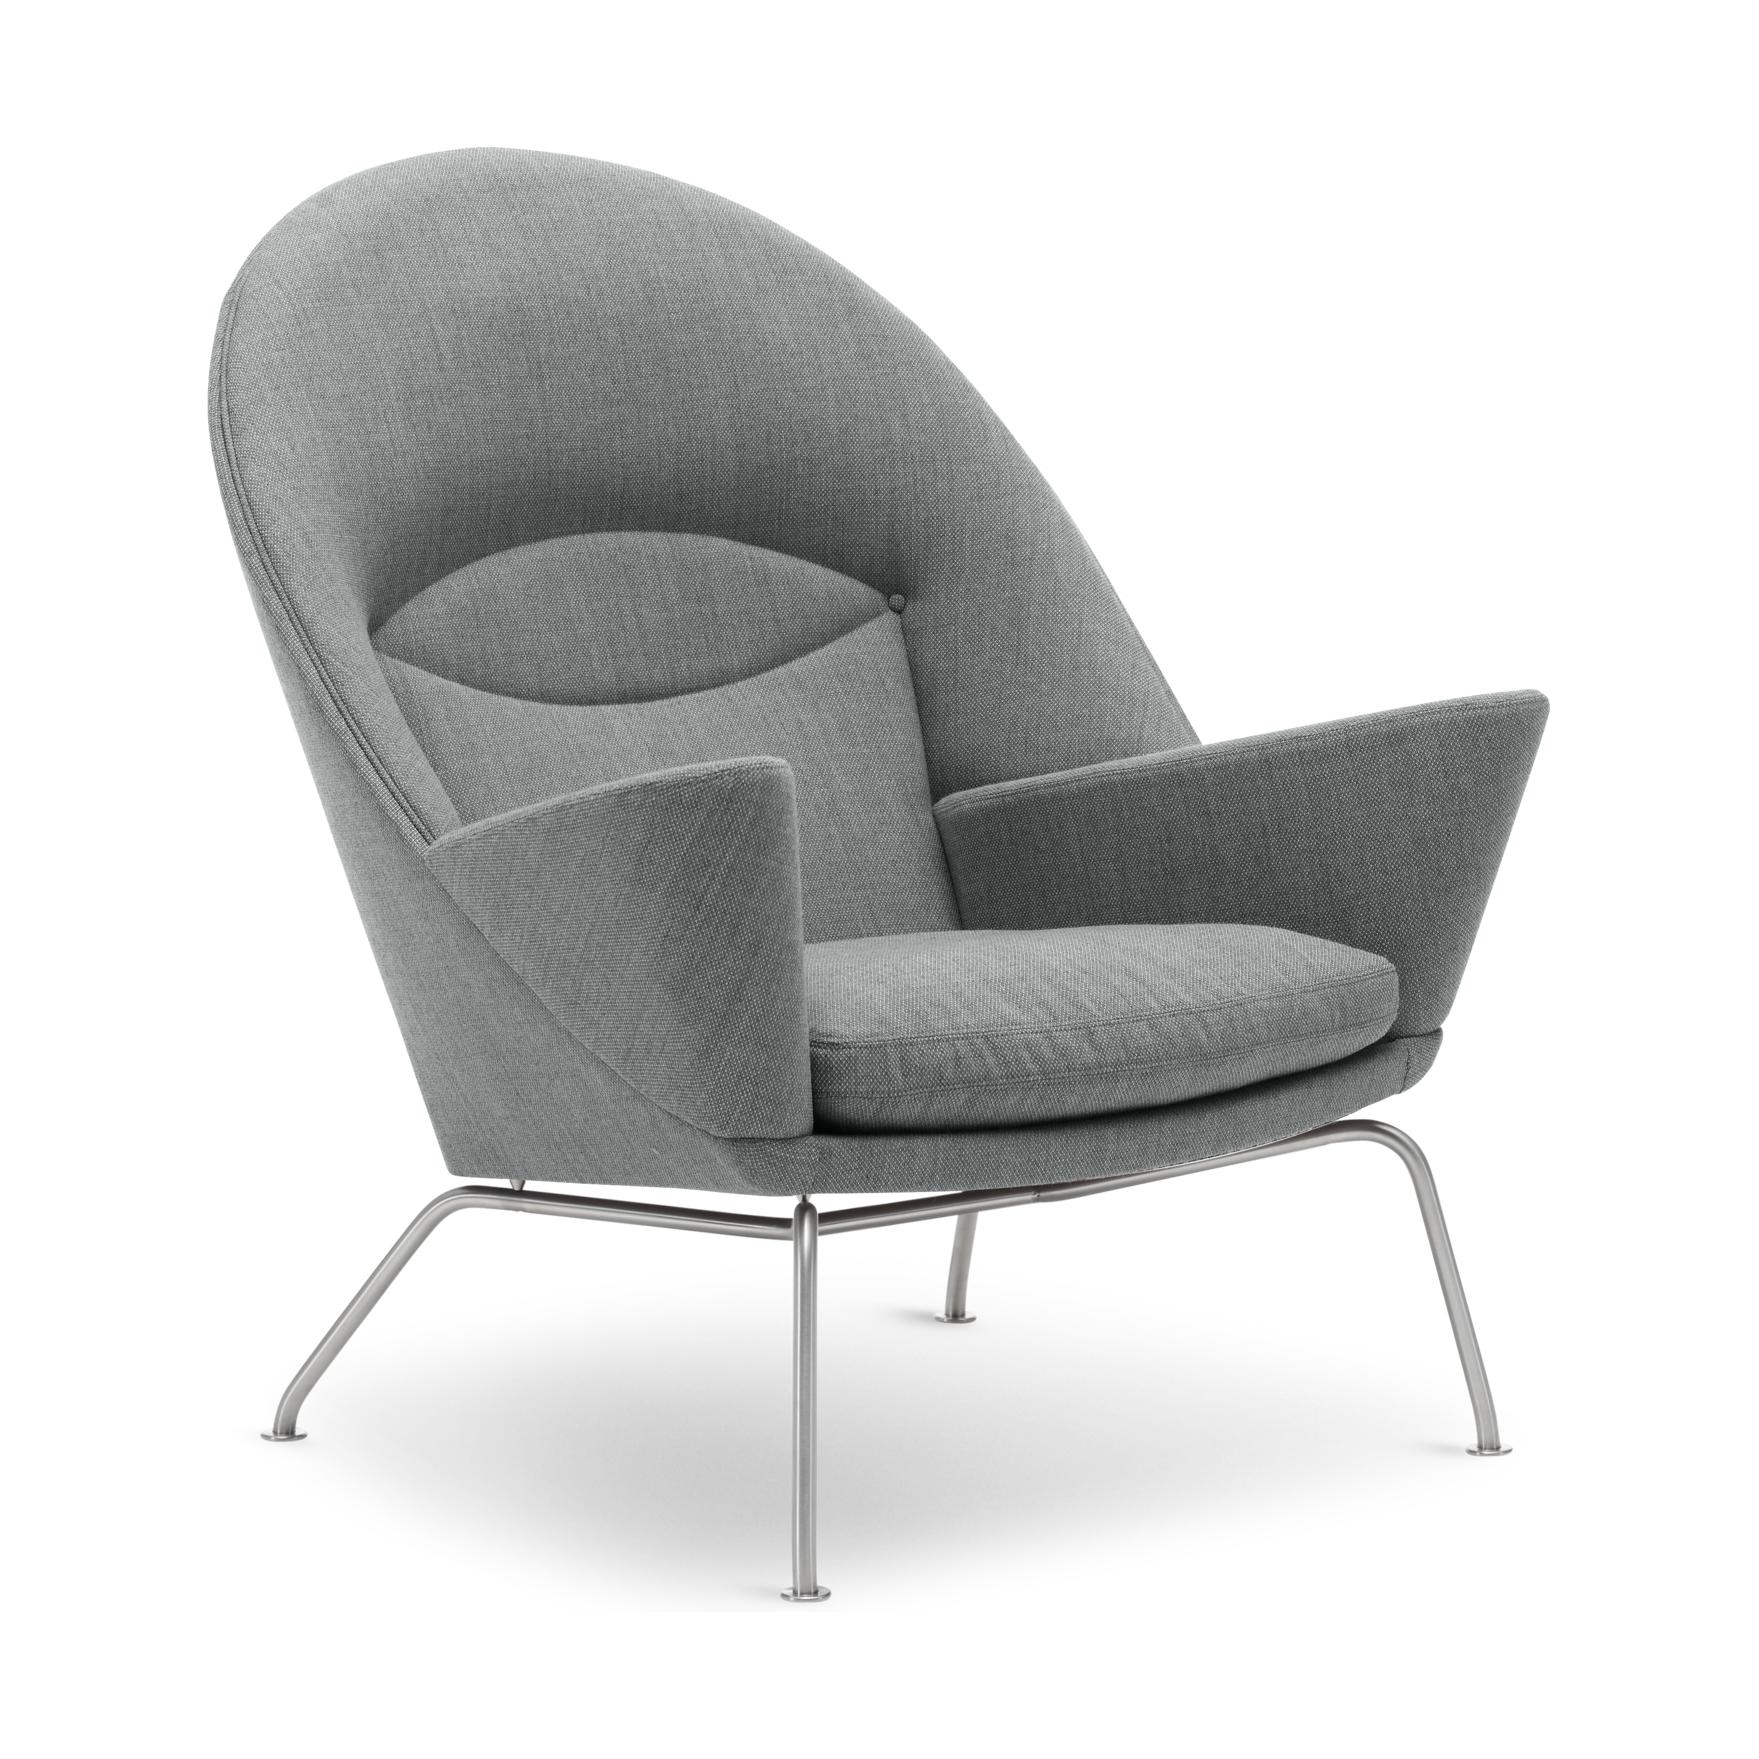 Carl Hansen CH468 Oculus stol, stål, ljusgrå tyg